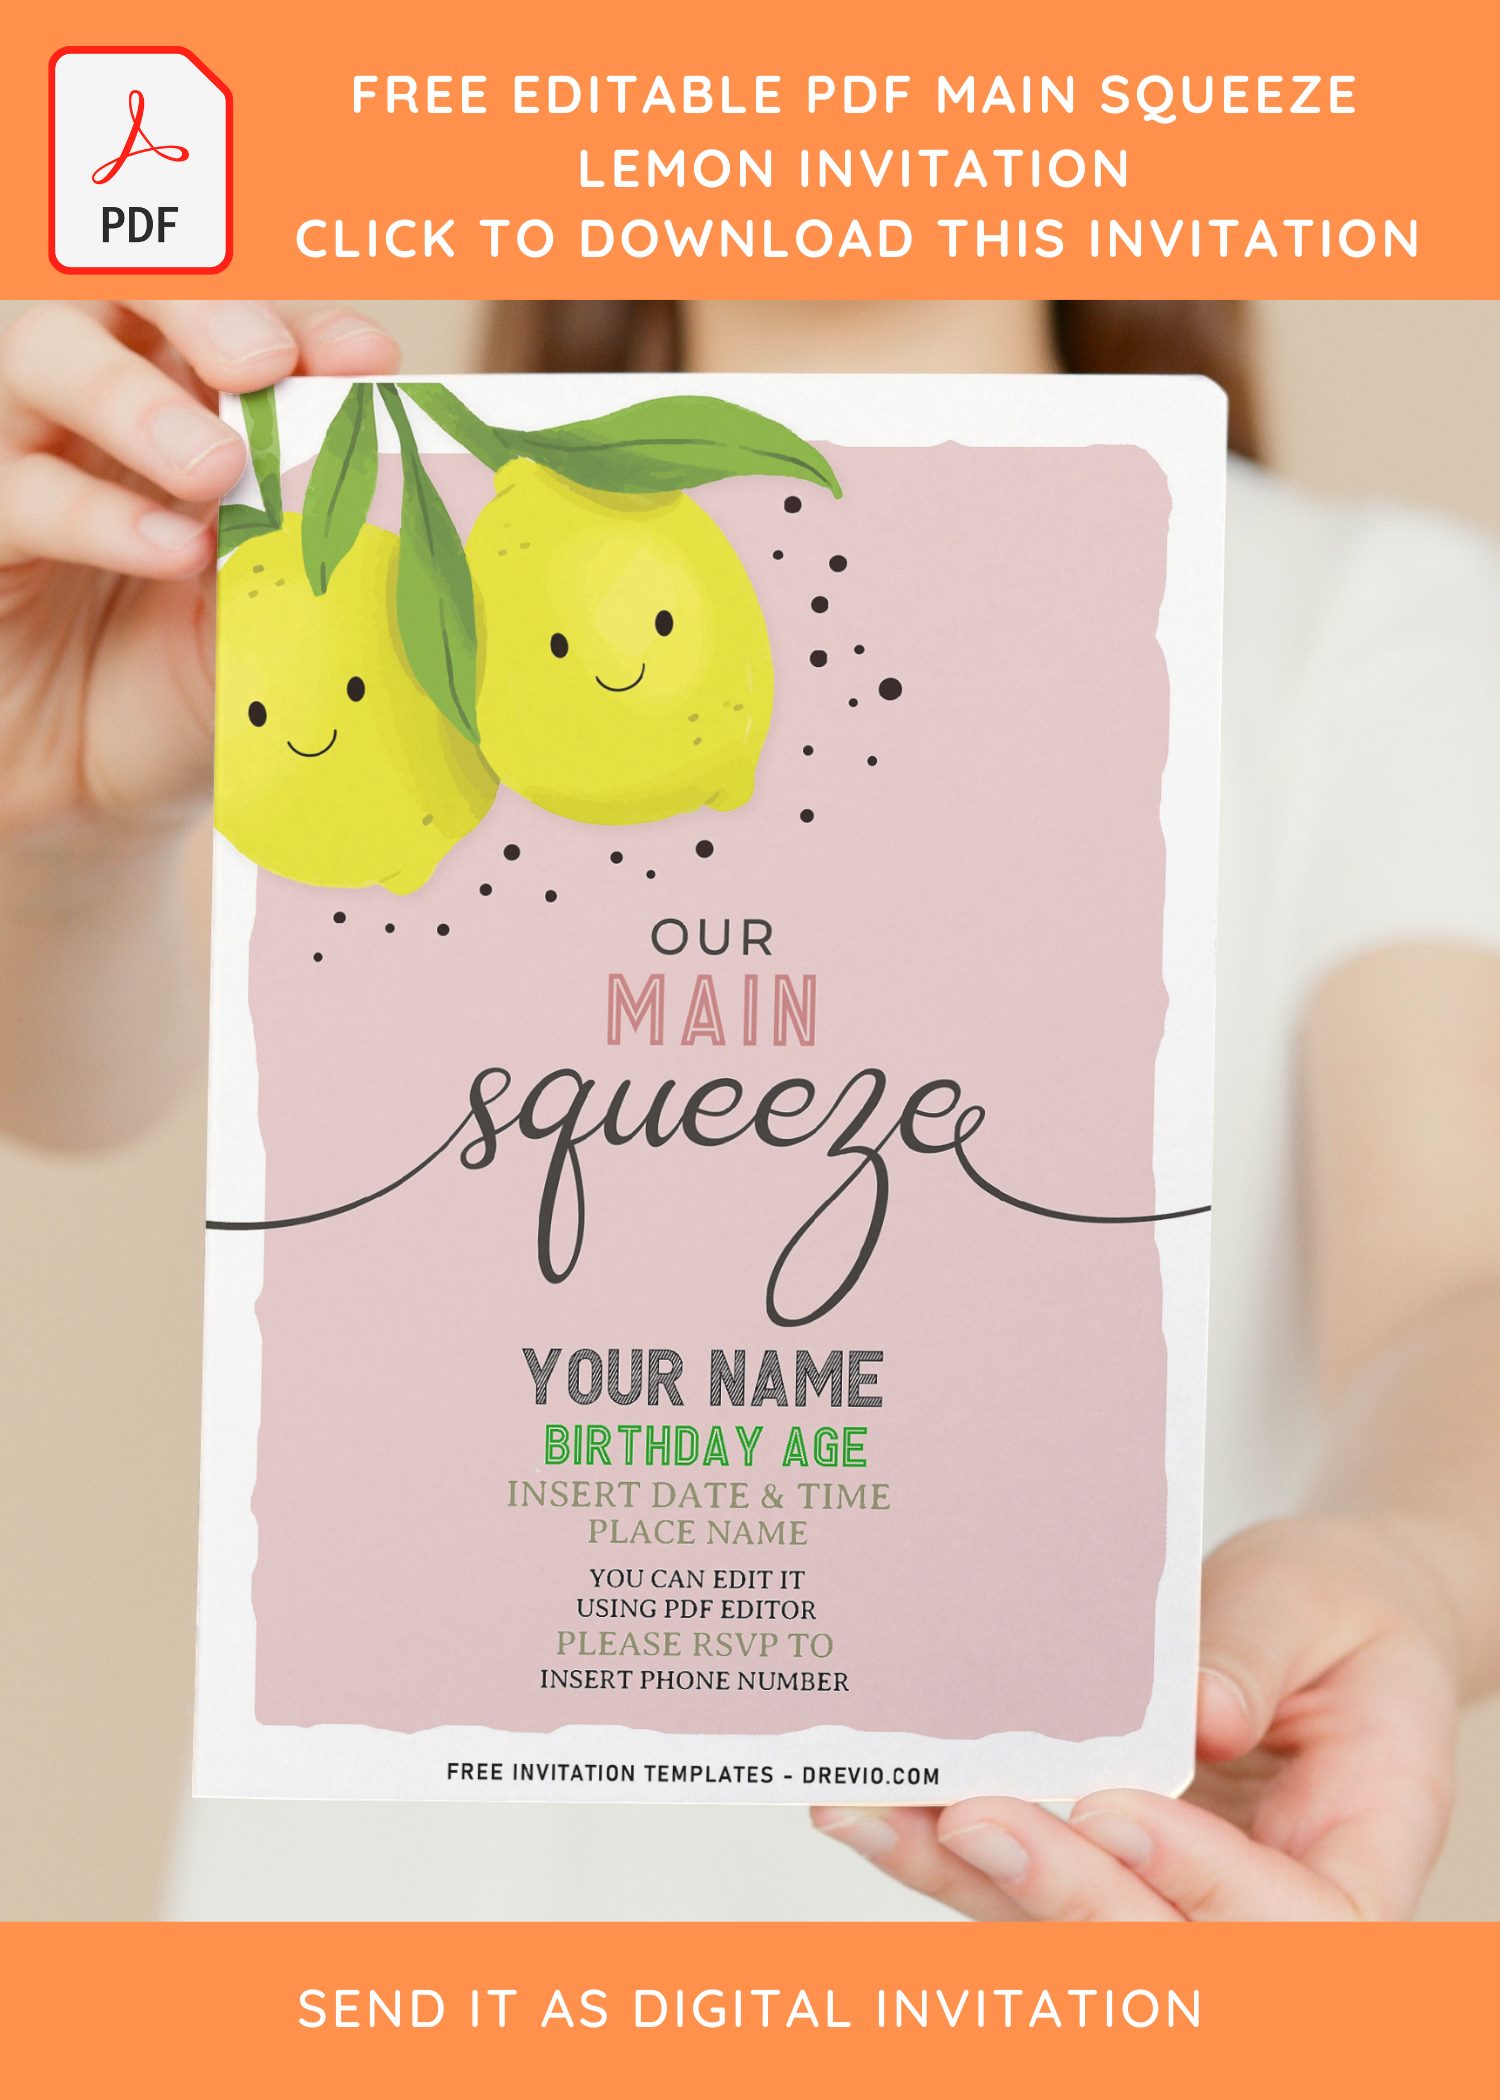 Free Editable PDF Main Squeeze Lemon Birthday Invitation Templates